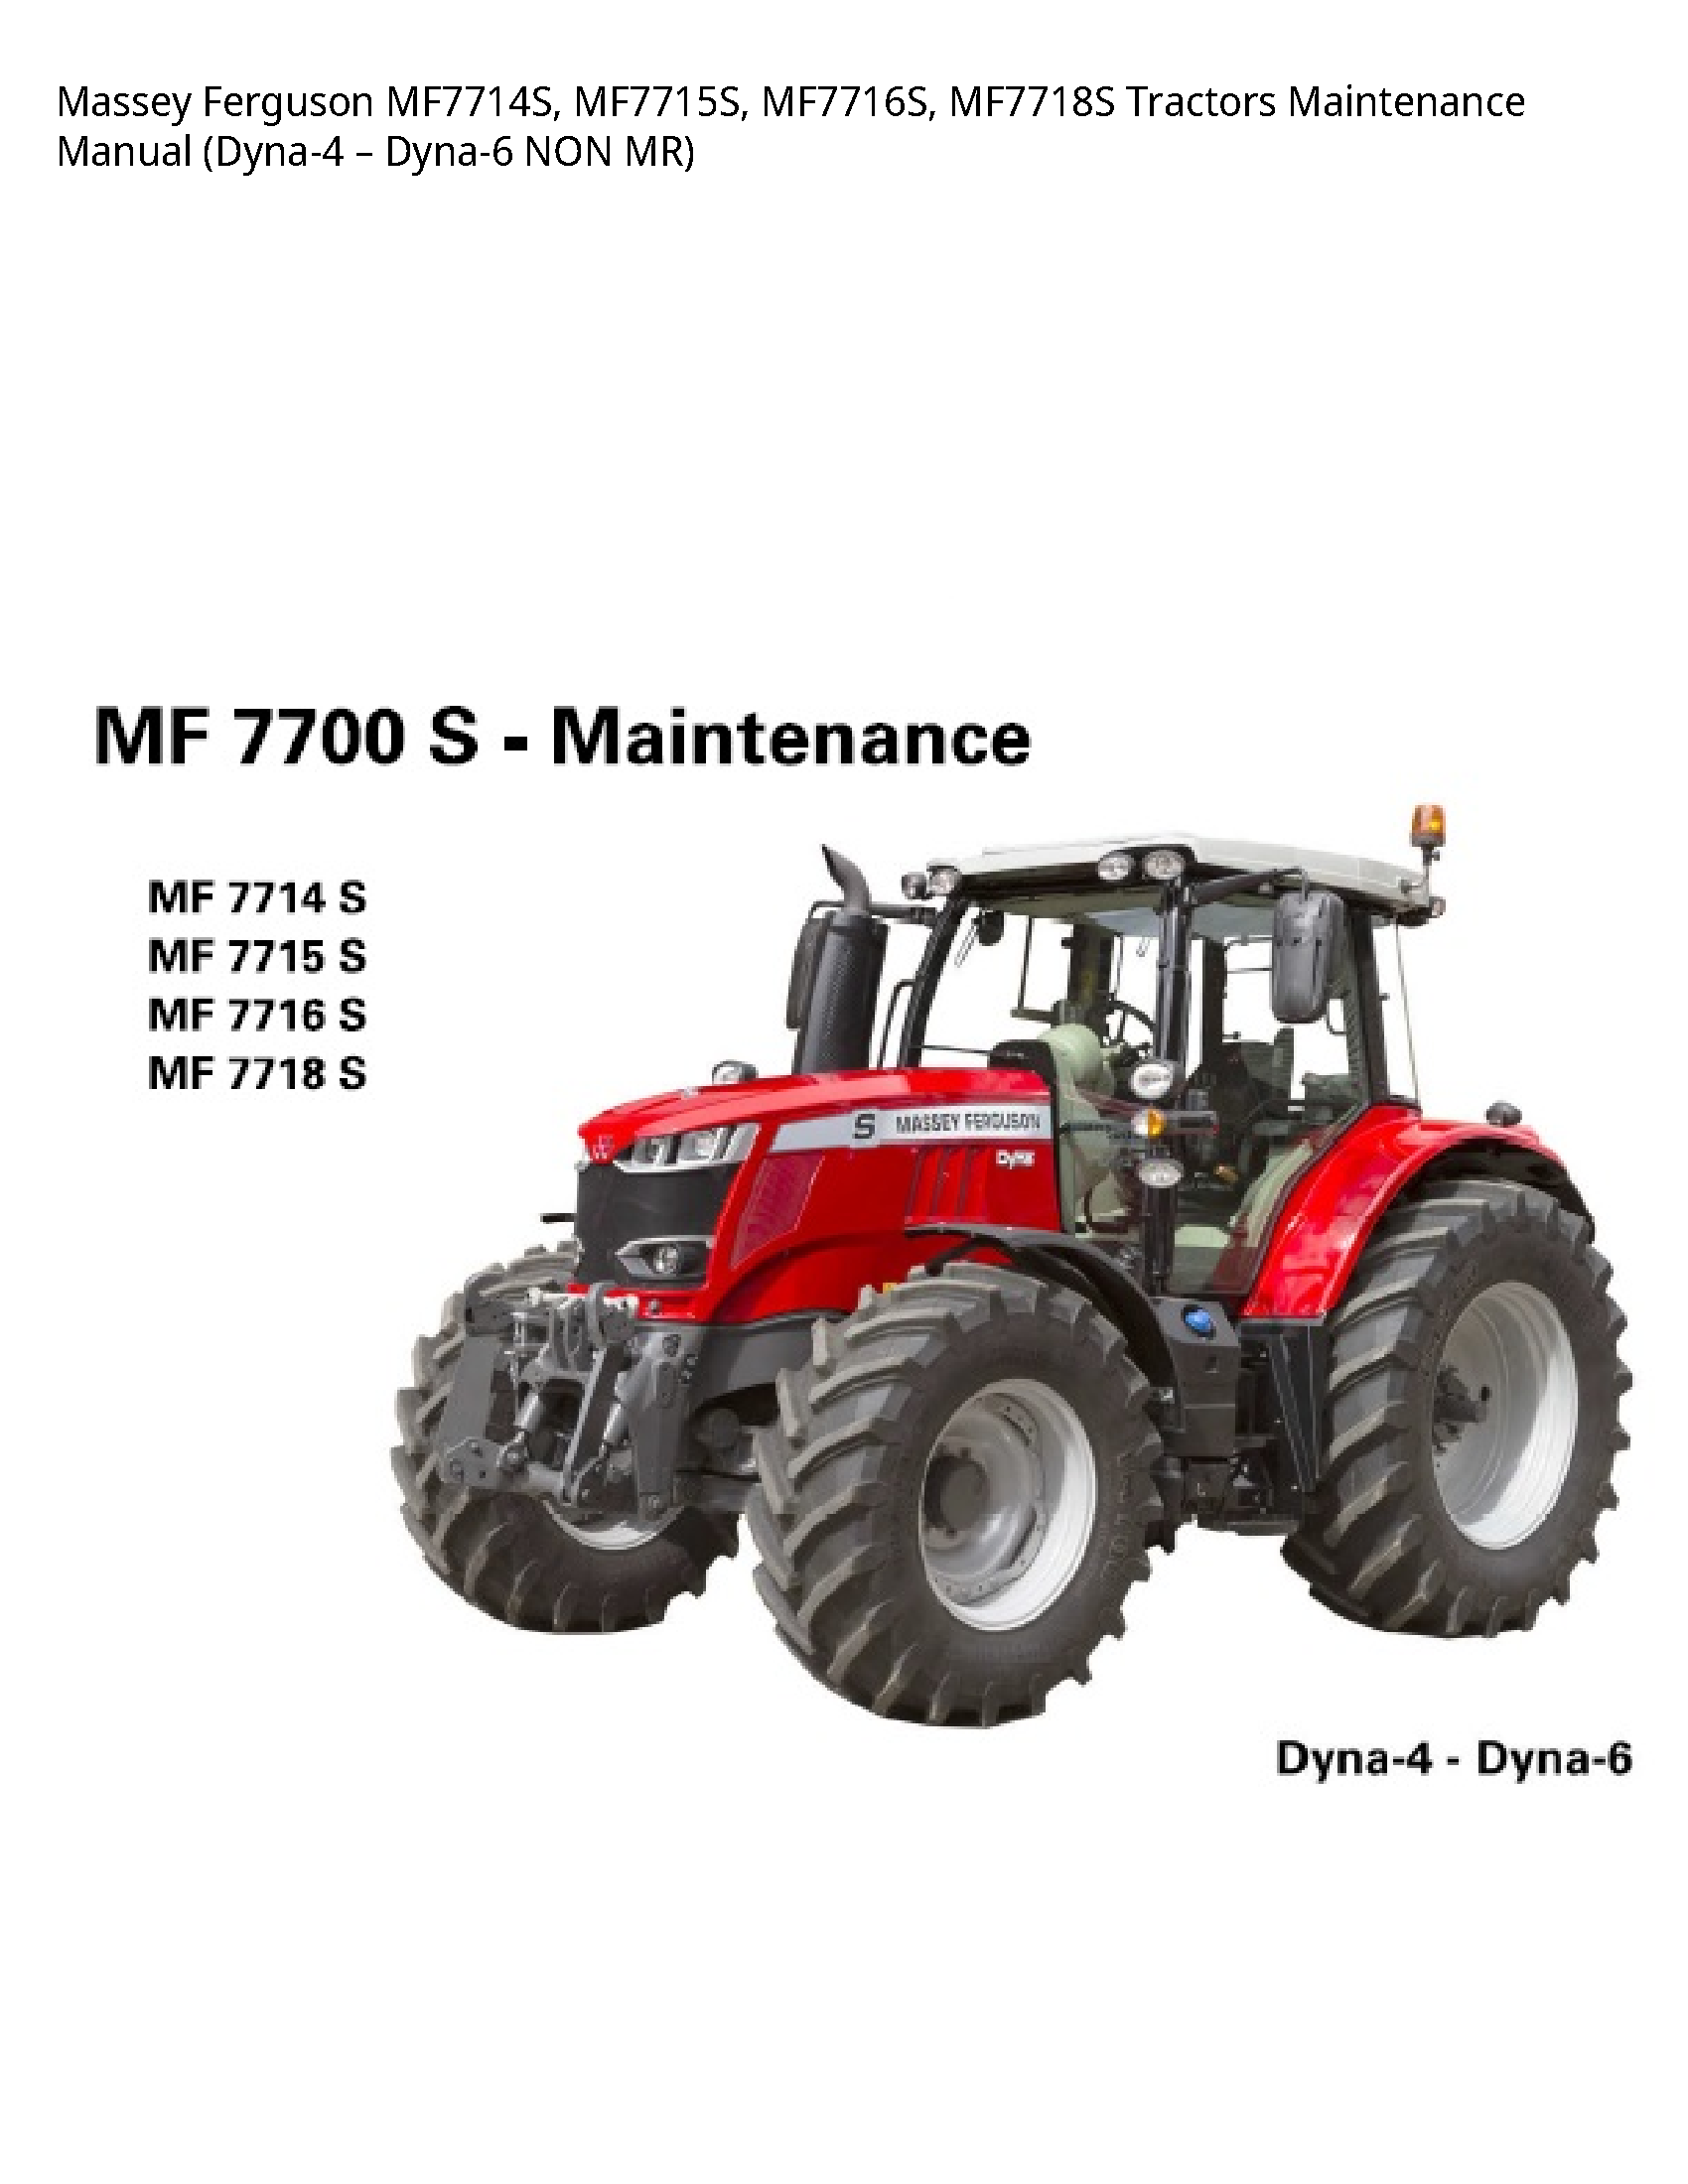 Massey Ferguson MF7714S Tractors Maintenance manual